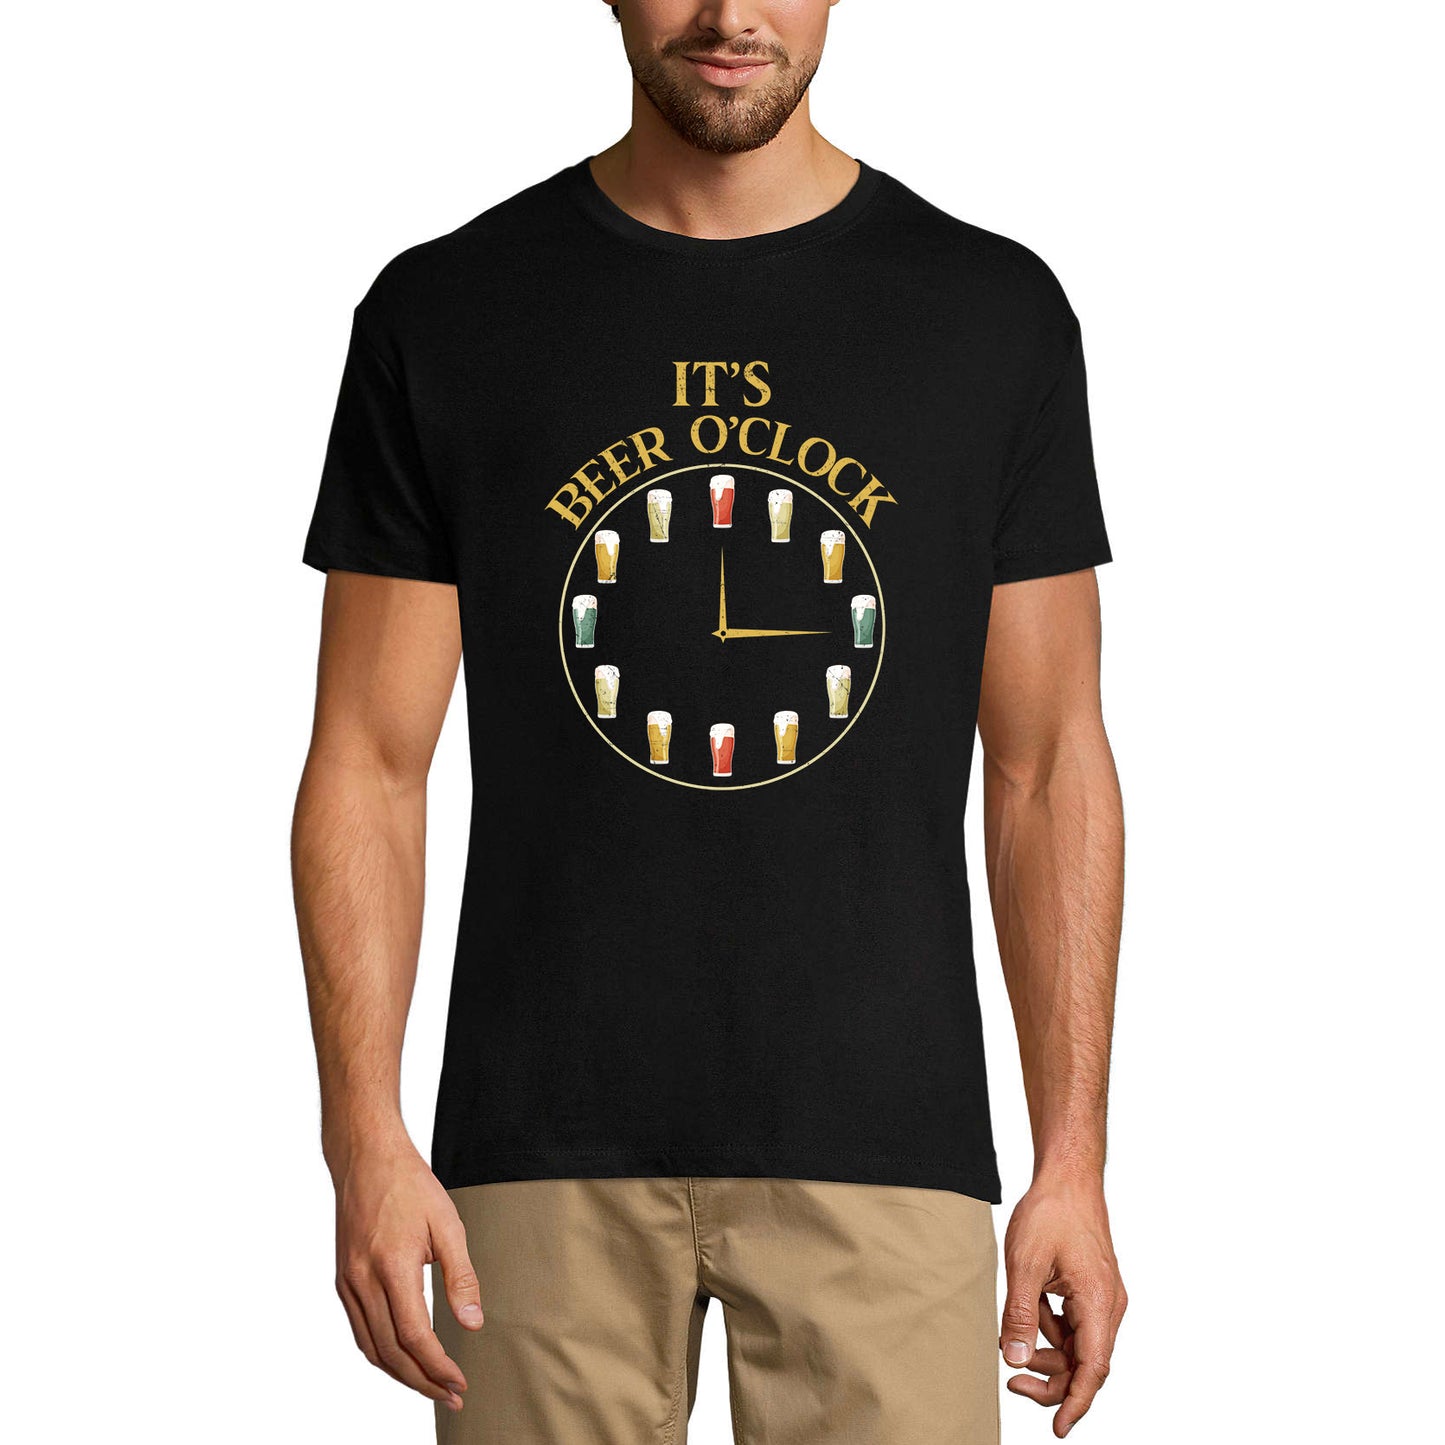 ULTRABASIC Men's Novelty T-Shirt It's Beer O'Clock - Funny Drinking Lover Slogan Tee Shirt